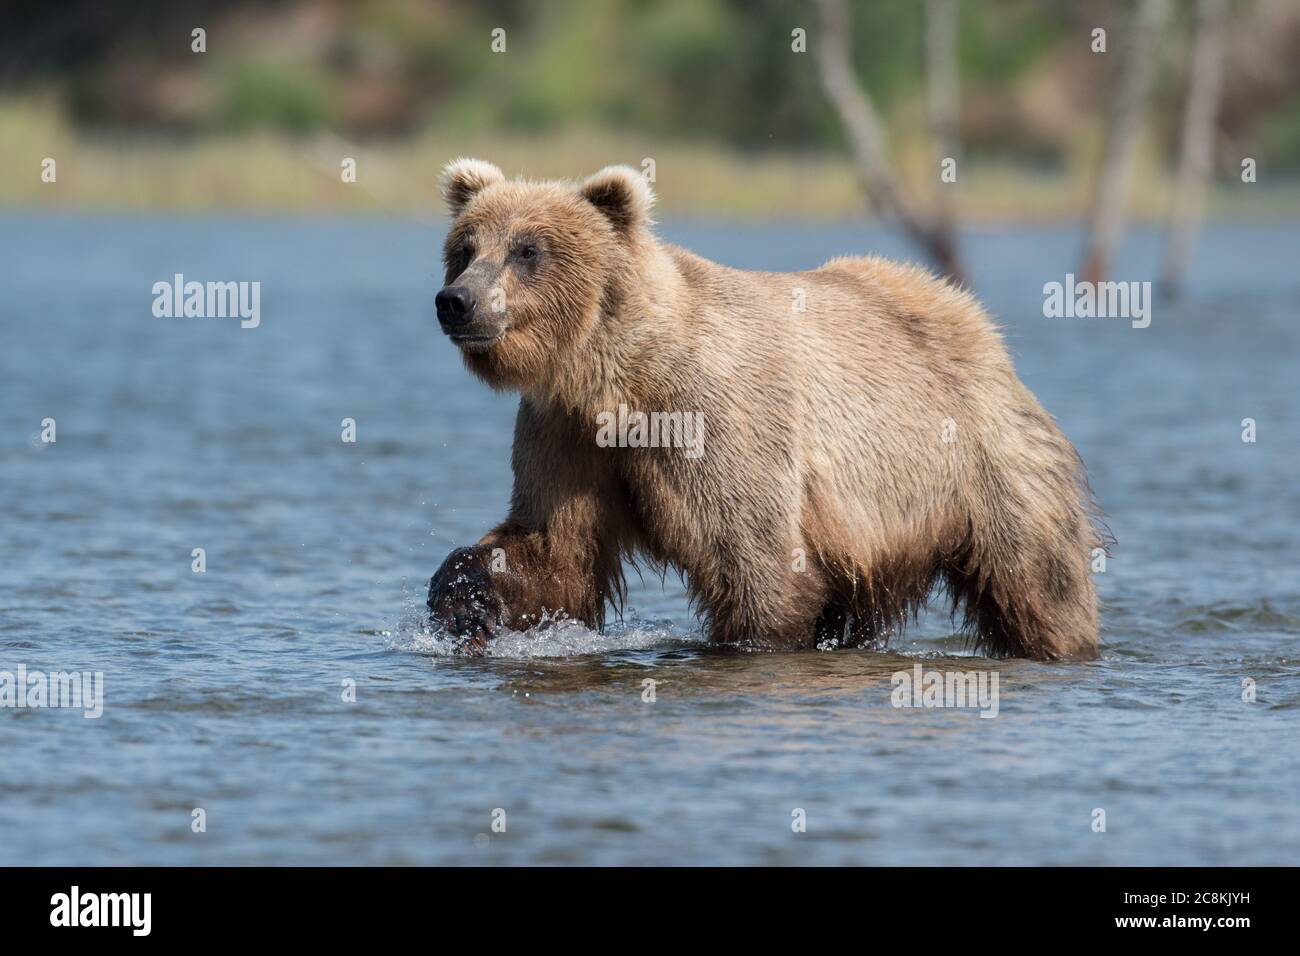 An Alaskan brown bear wading through the water of Brooks River in Katmai National Park, Alaska Stock Photo